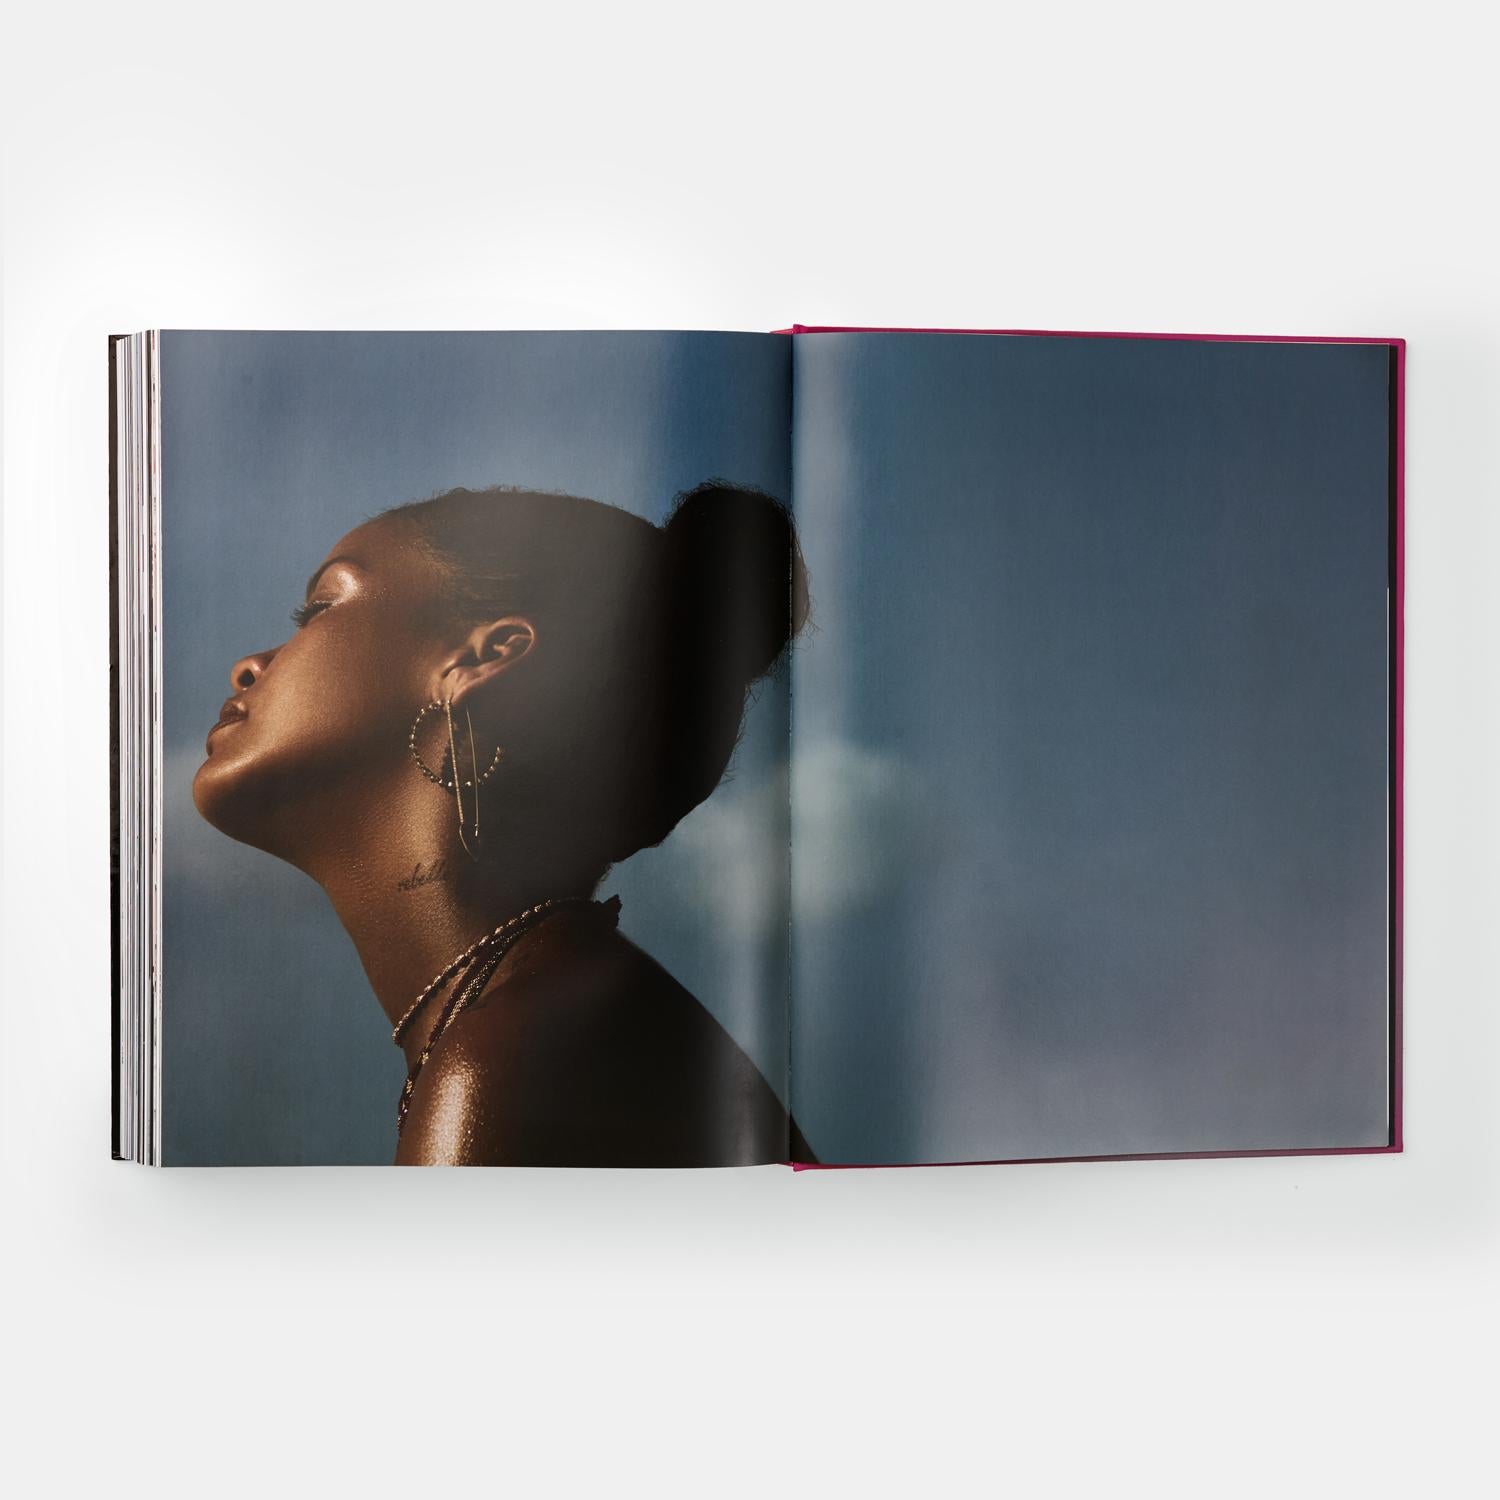 Le livre de Rihanna en vente 6